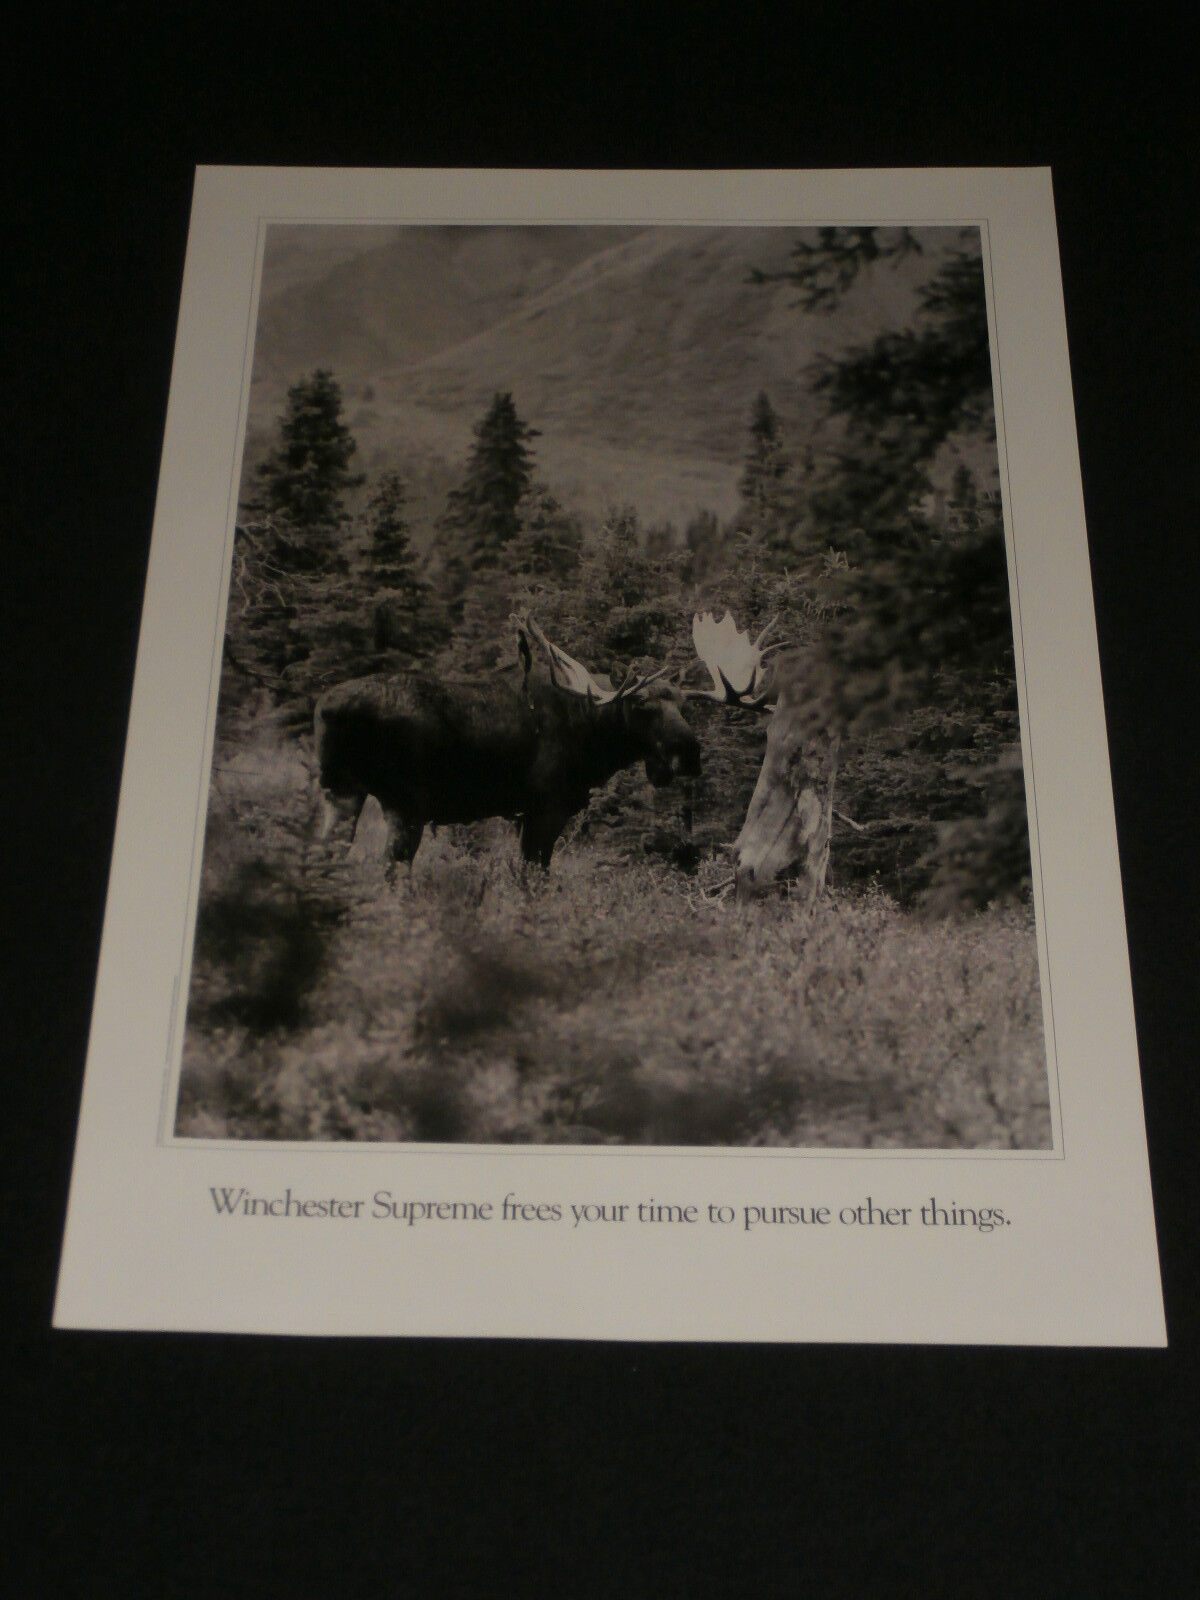 1988 Vintage Winchester Supreme Black & White Advertising Poster Moose Hunting